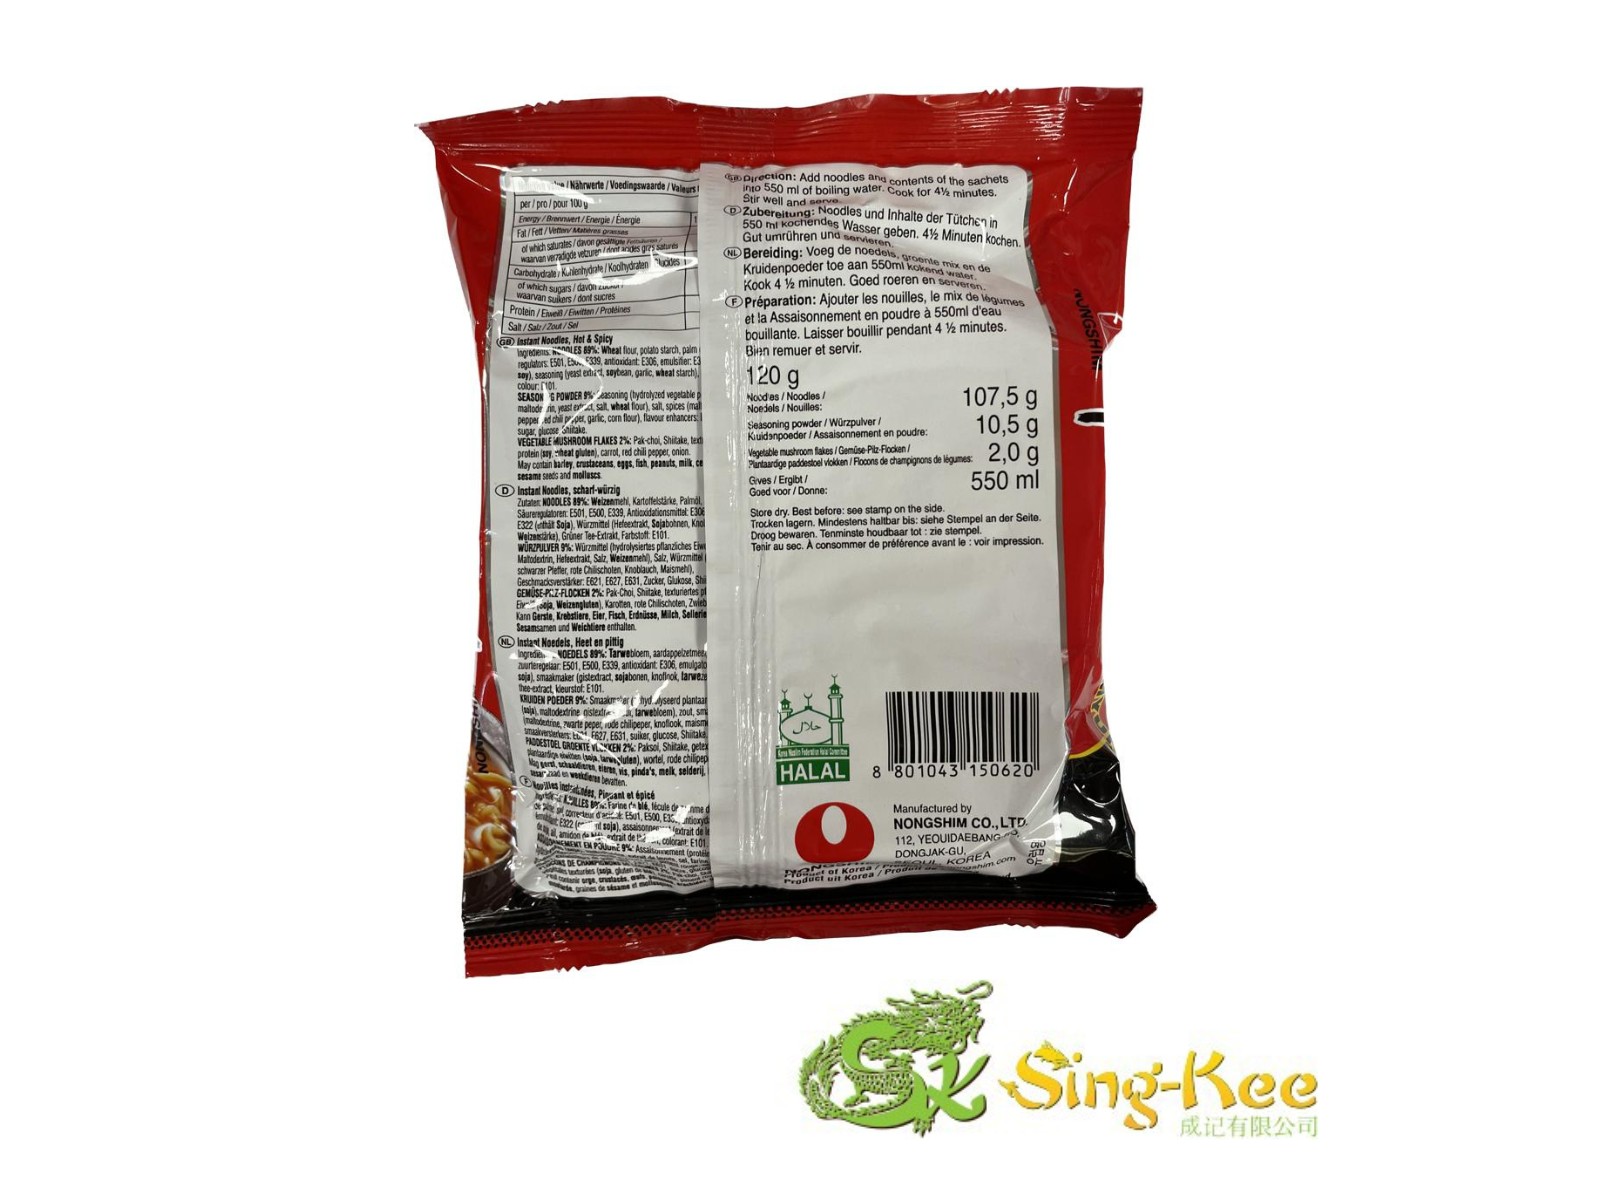 Nong Shim Instant Noodles Shin Ramyun 120 g - Fast shipping in